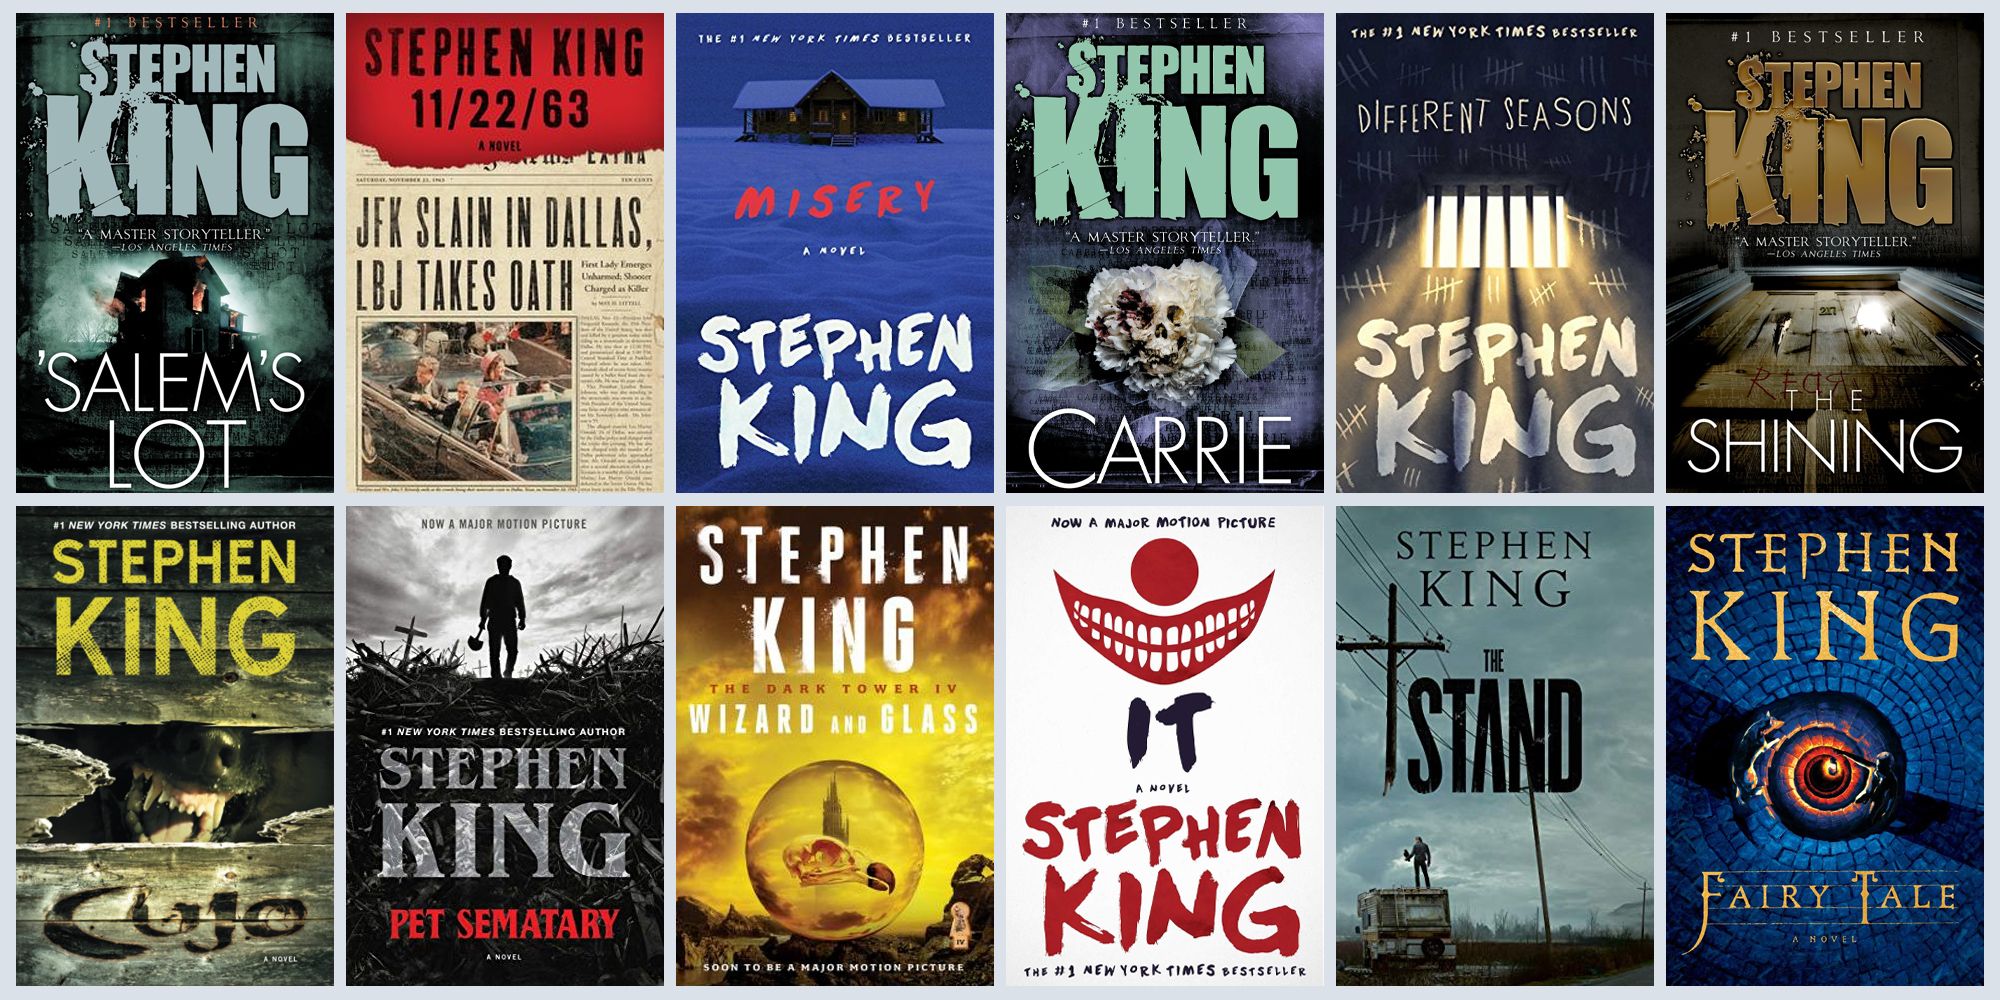 What is Stephen King's best written book?